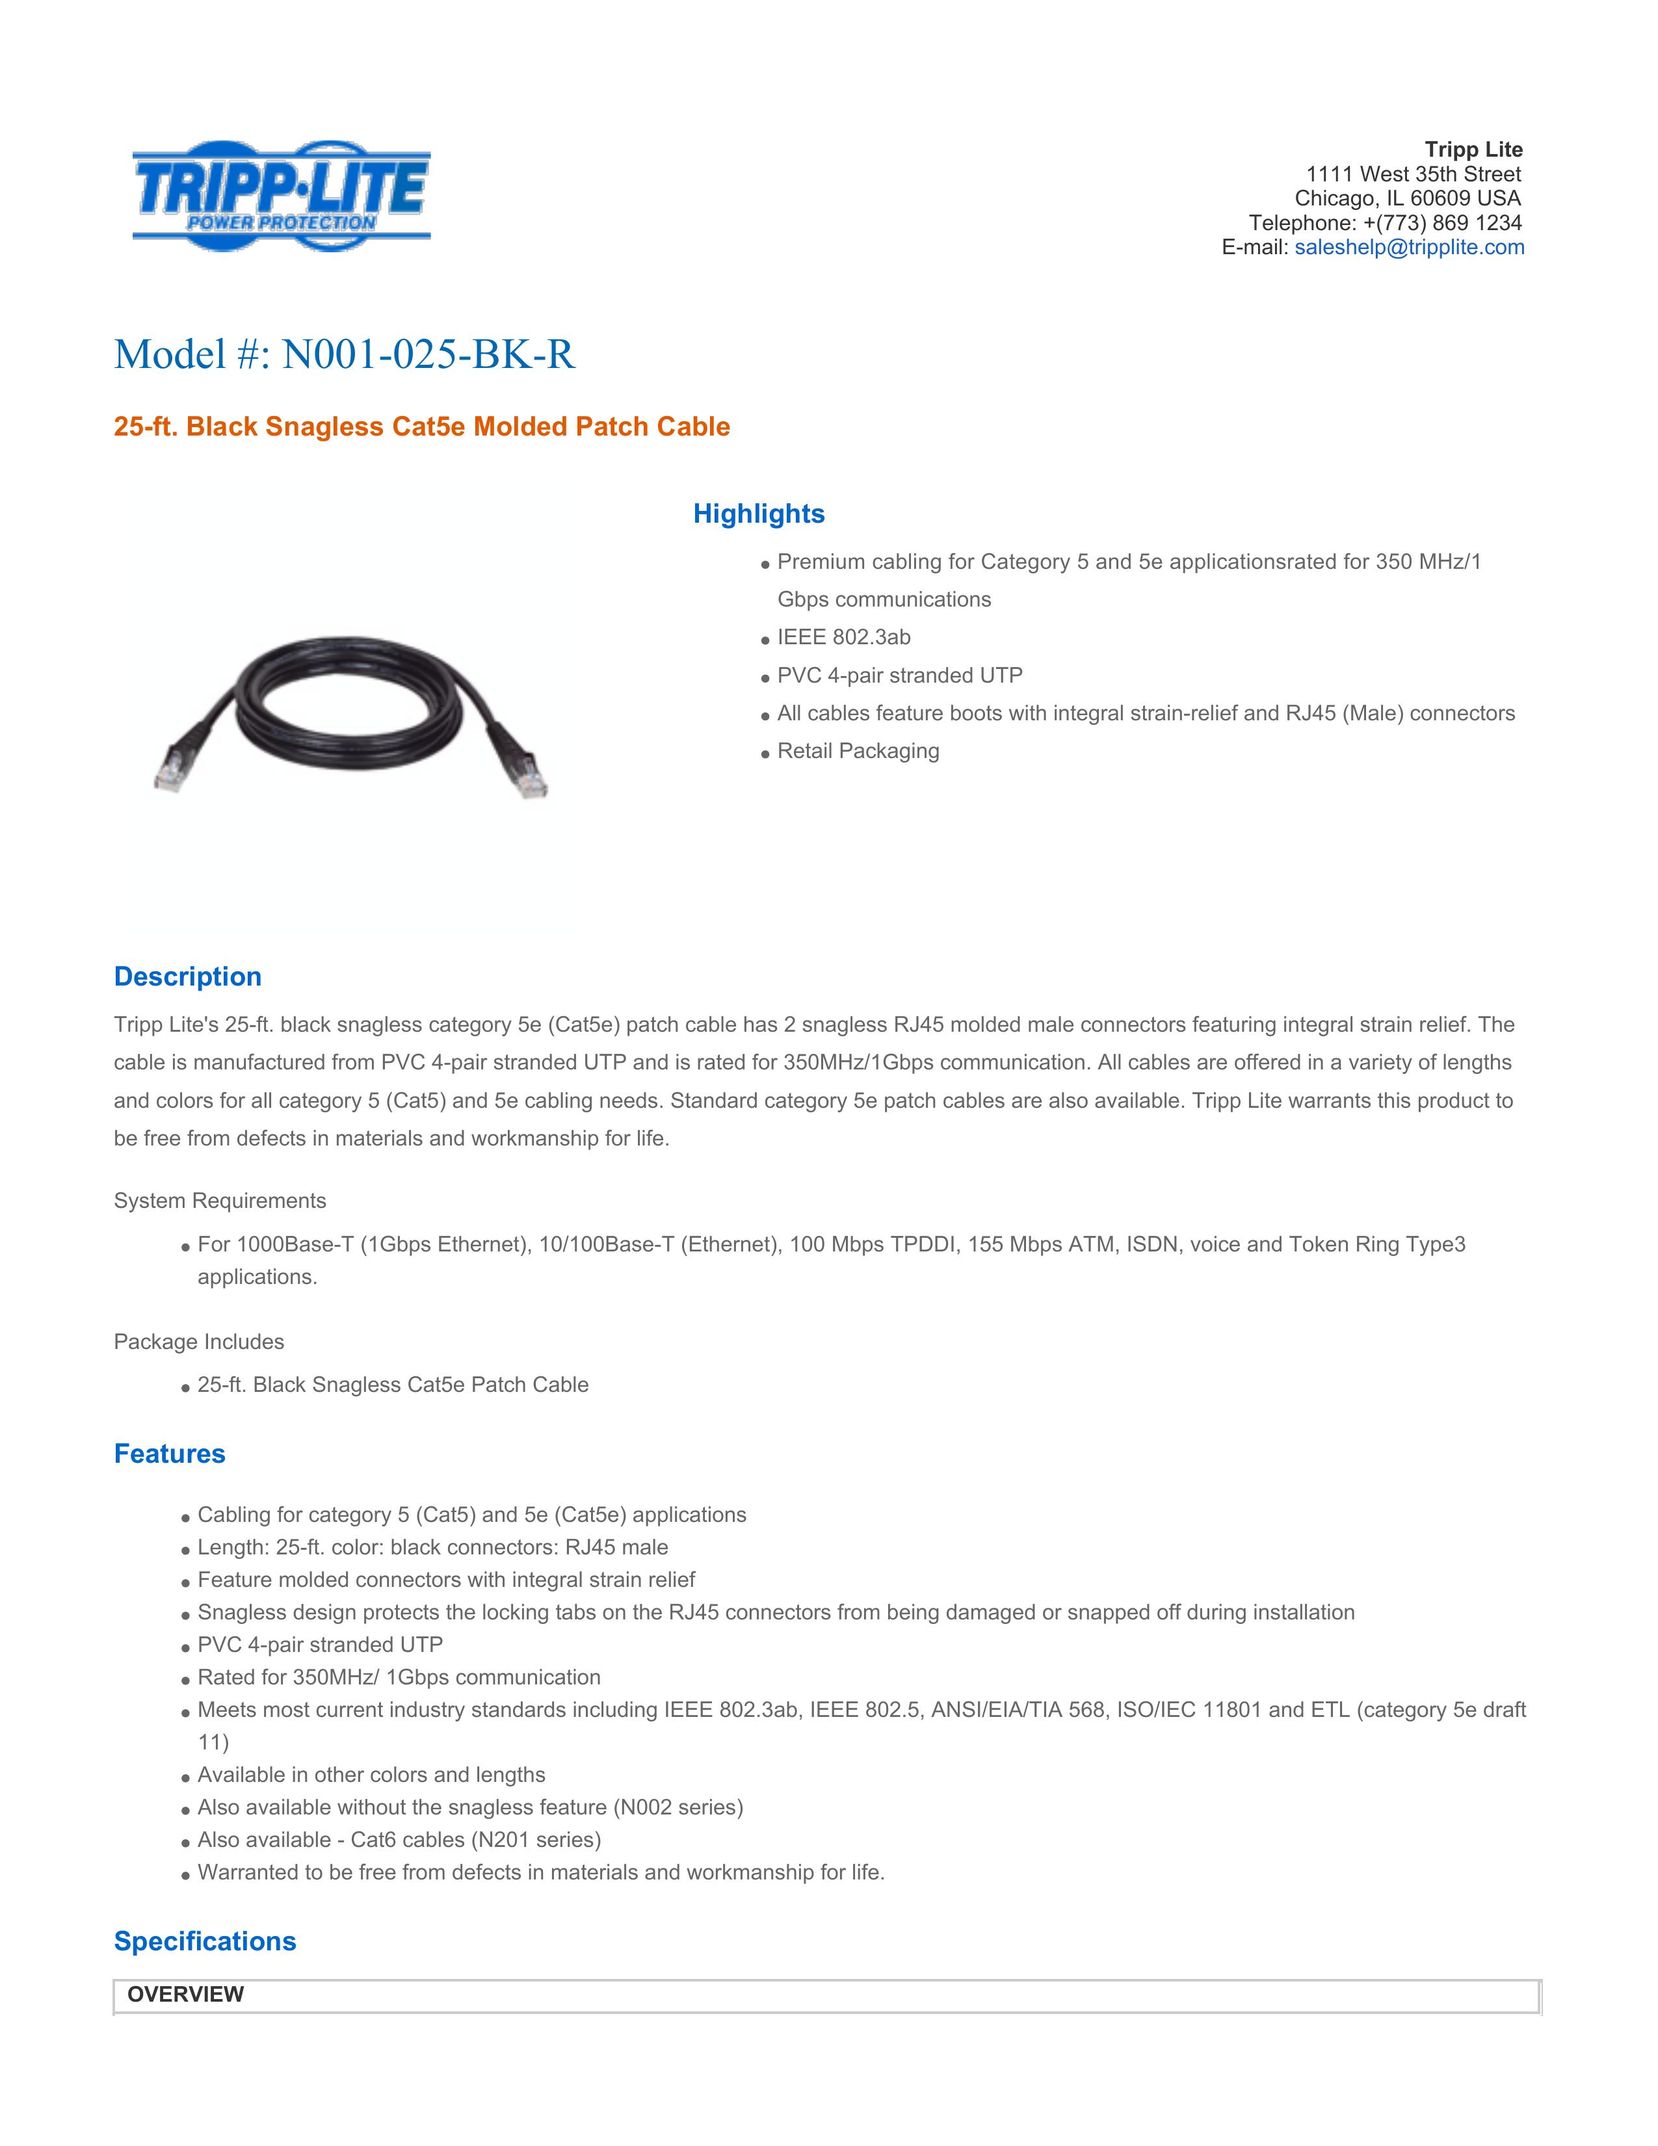 Tripp Lite N001-025-BK-R TV Cables User Manual